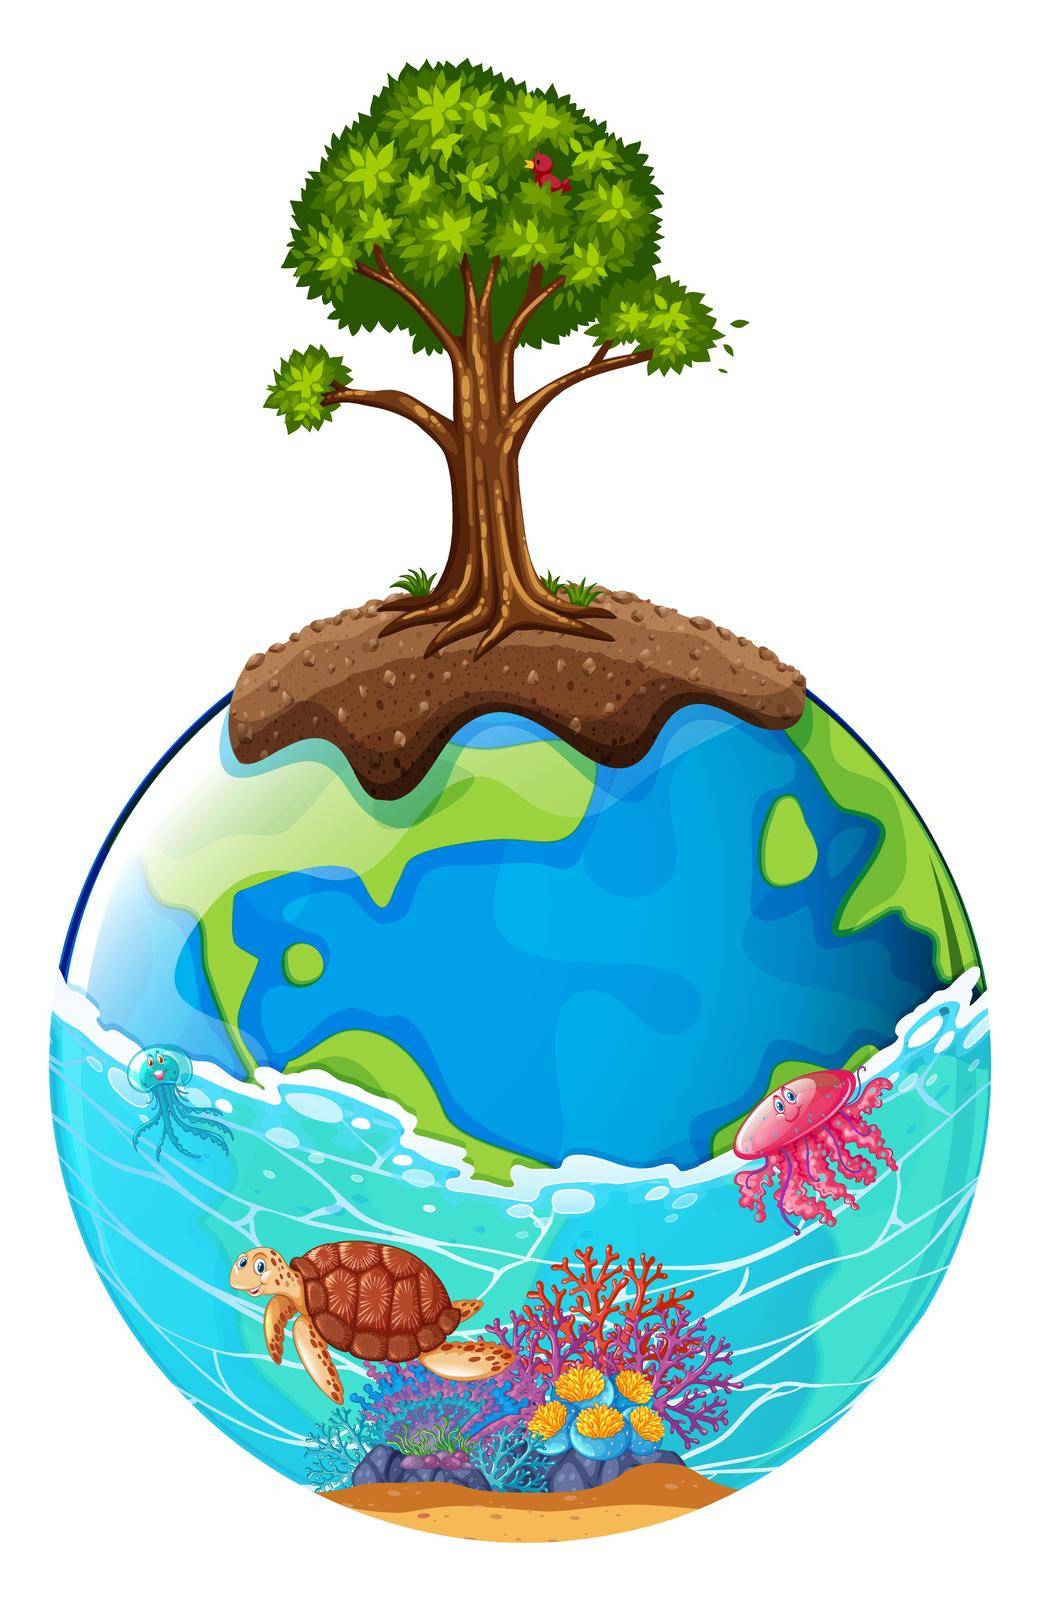 Tree and ocean on earth illustration